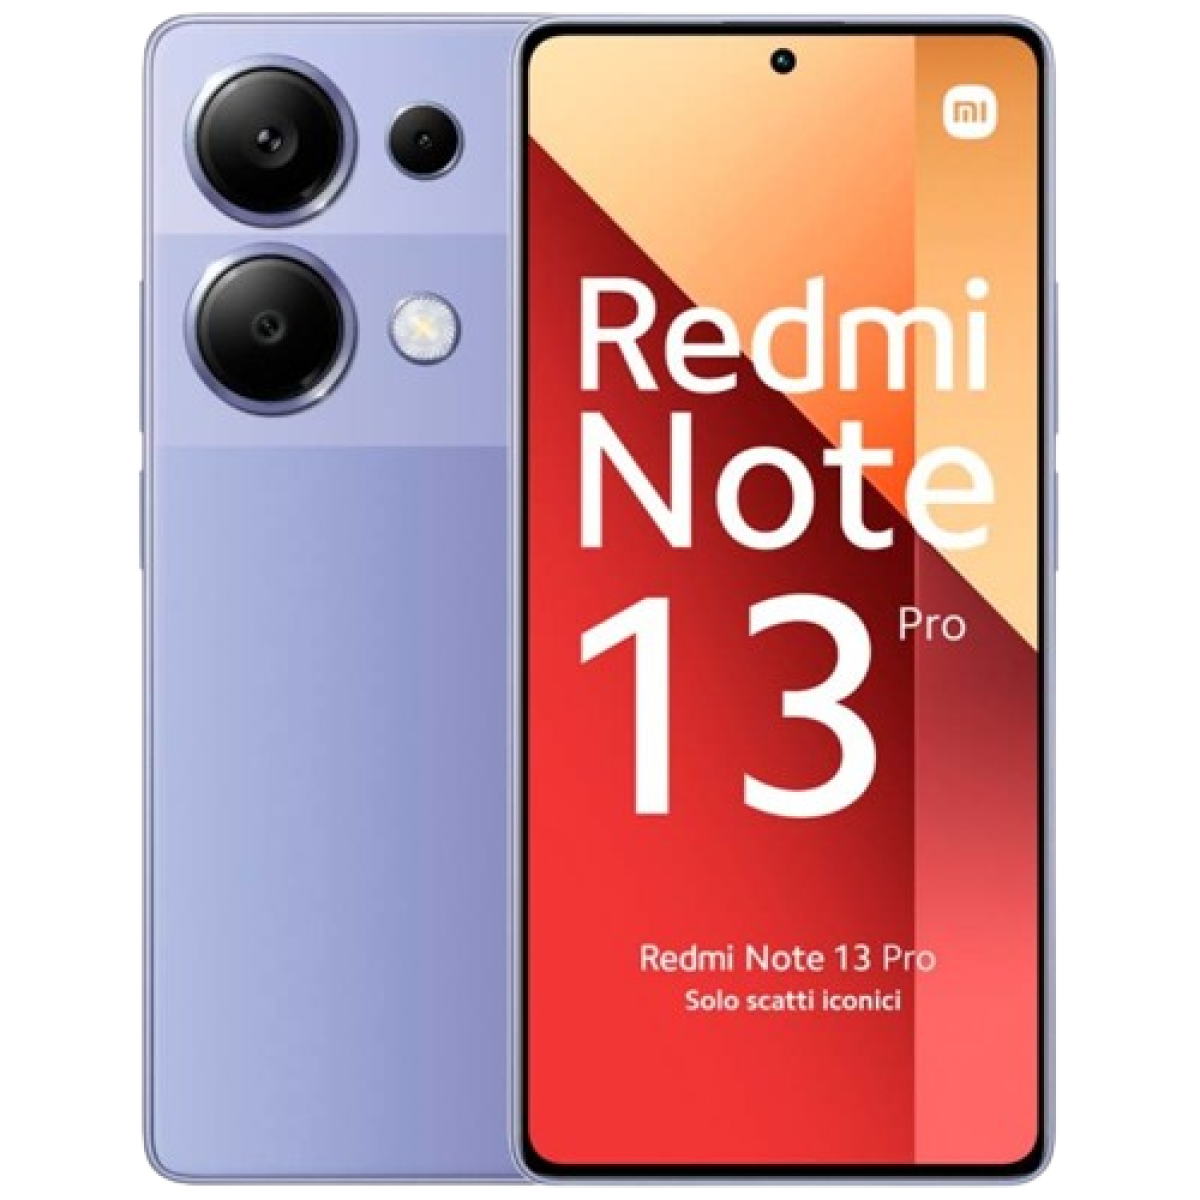 Buy Xiaomi Redmi Note 13 Pro Plus 5G 8GB/256GB ▷ Xiaomi Store in kiboTEK  Spain Europe®